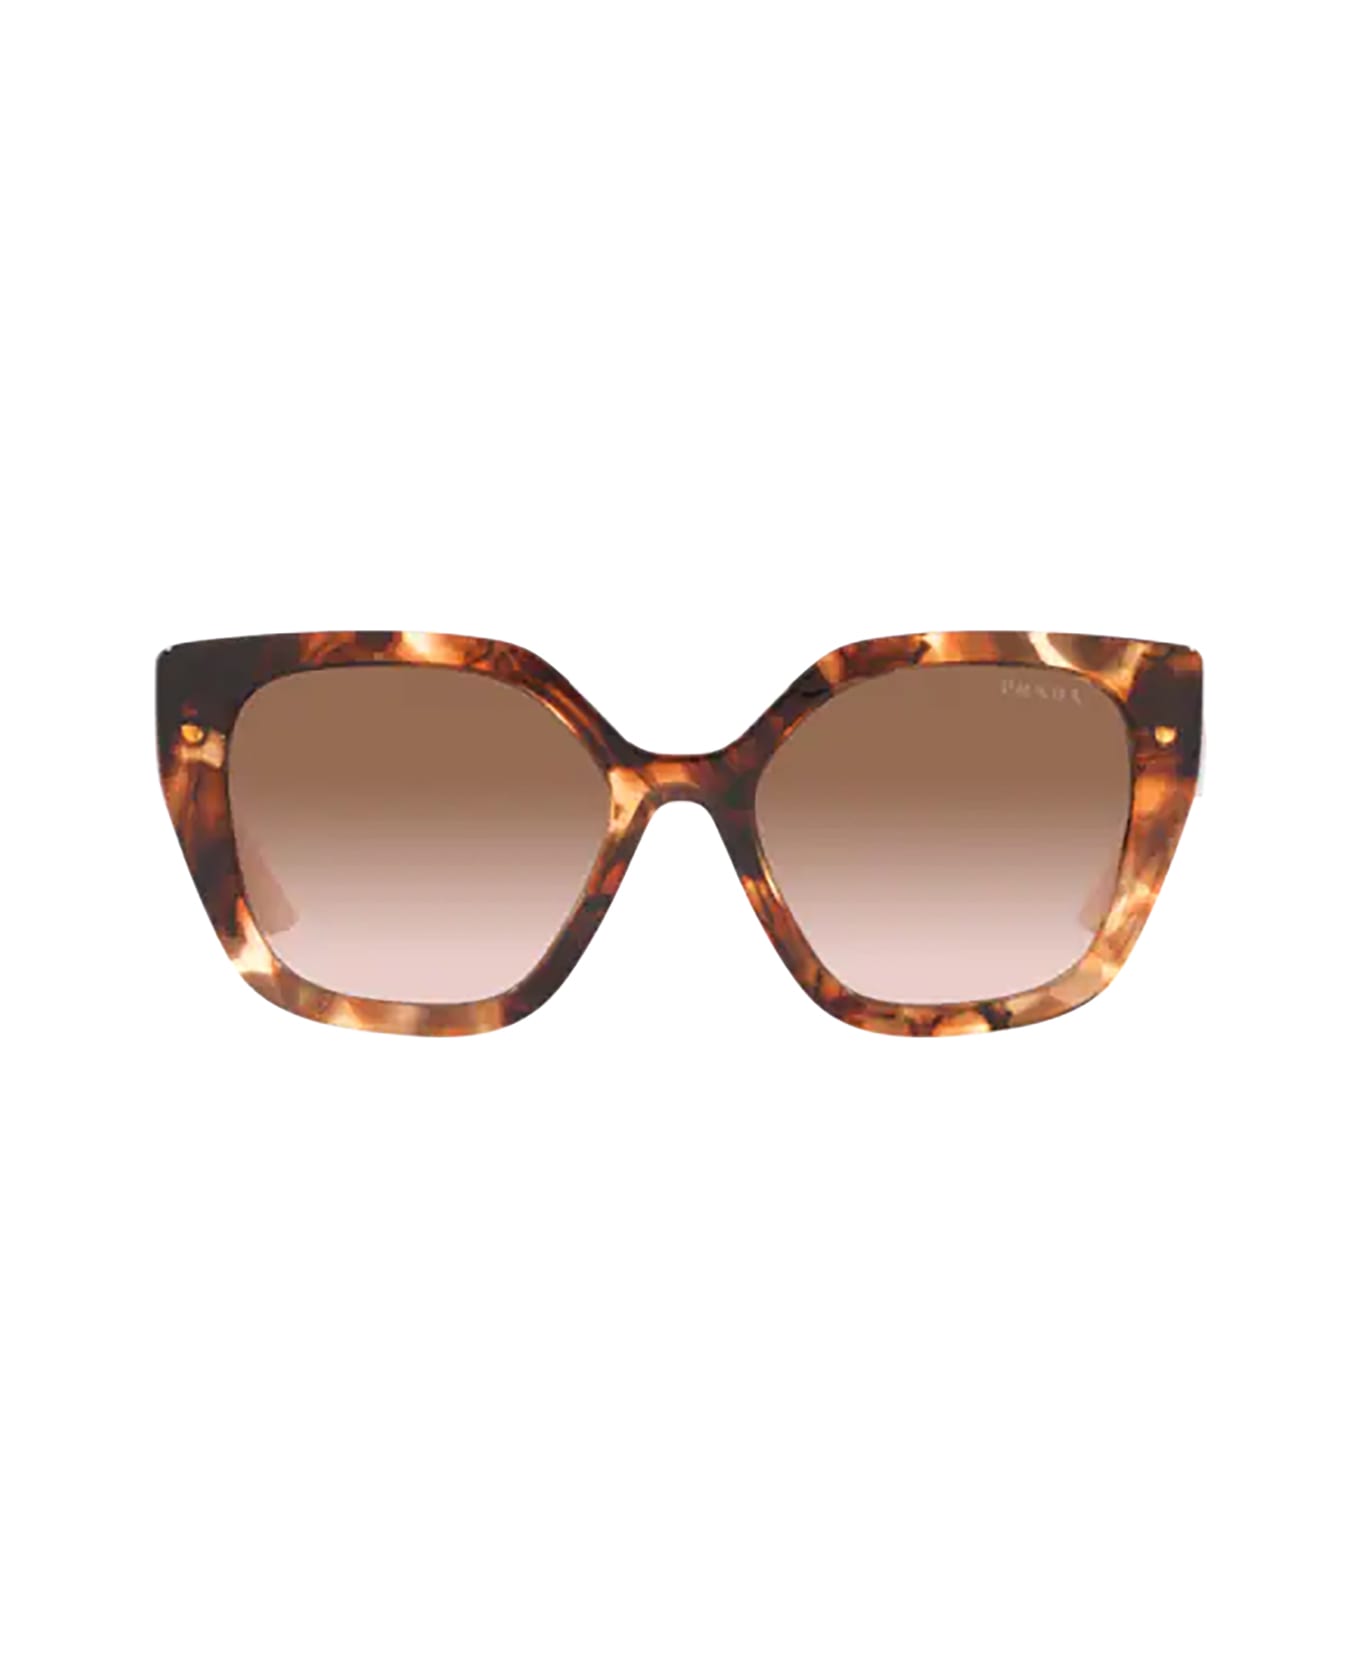 Prada Eyewear Pr 24xs Caramel Tortoise Sunglasses - Caramel Tortoise